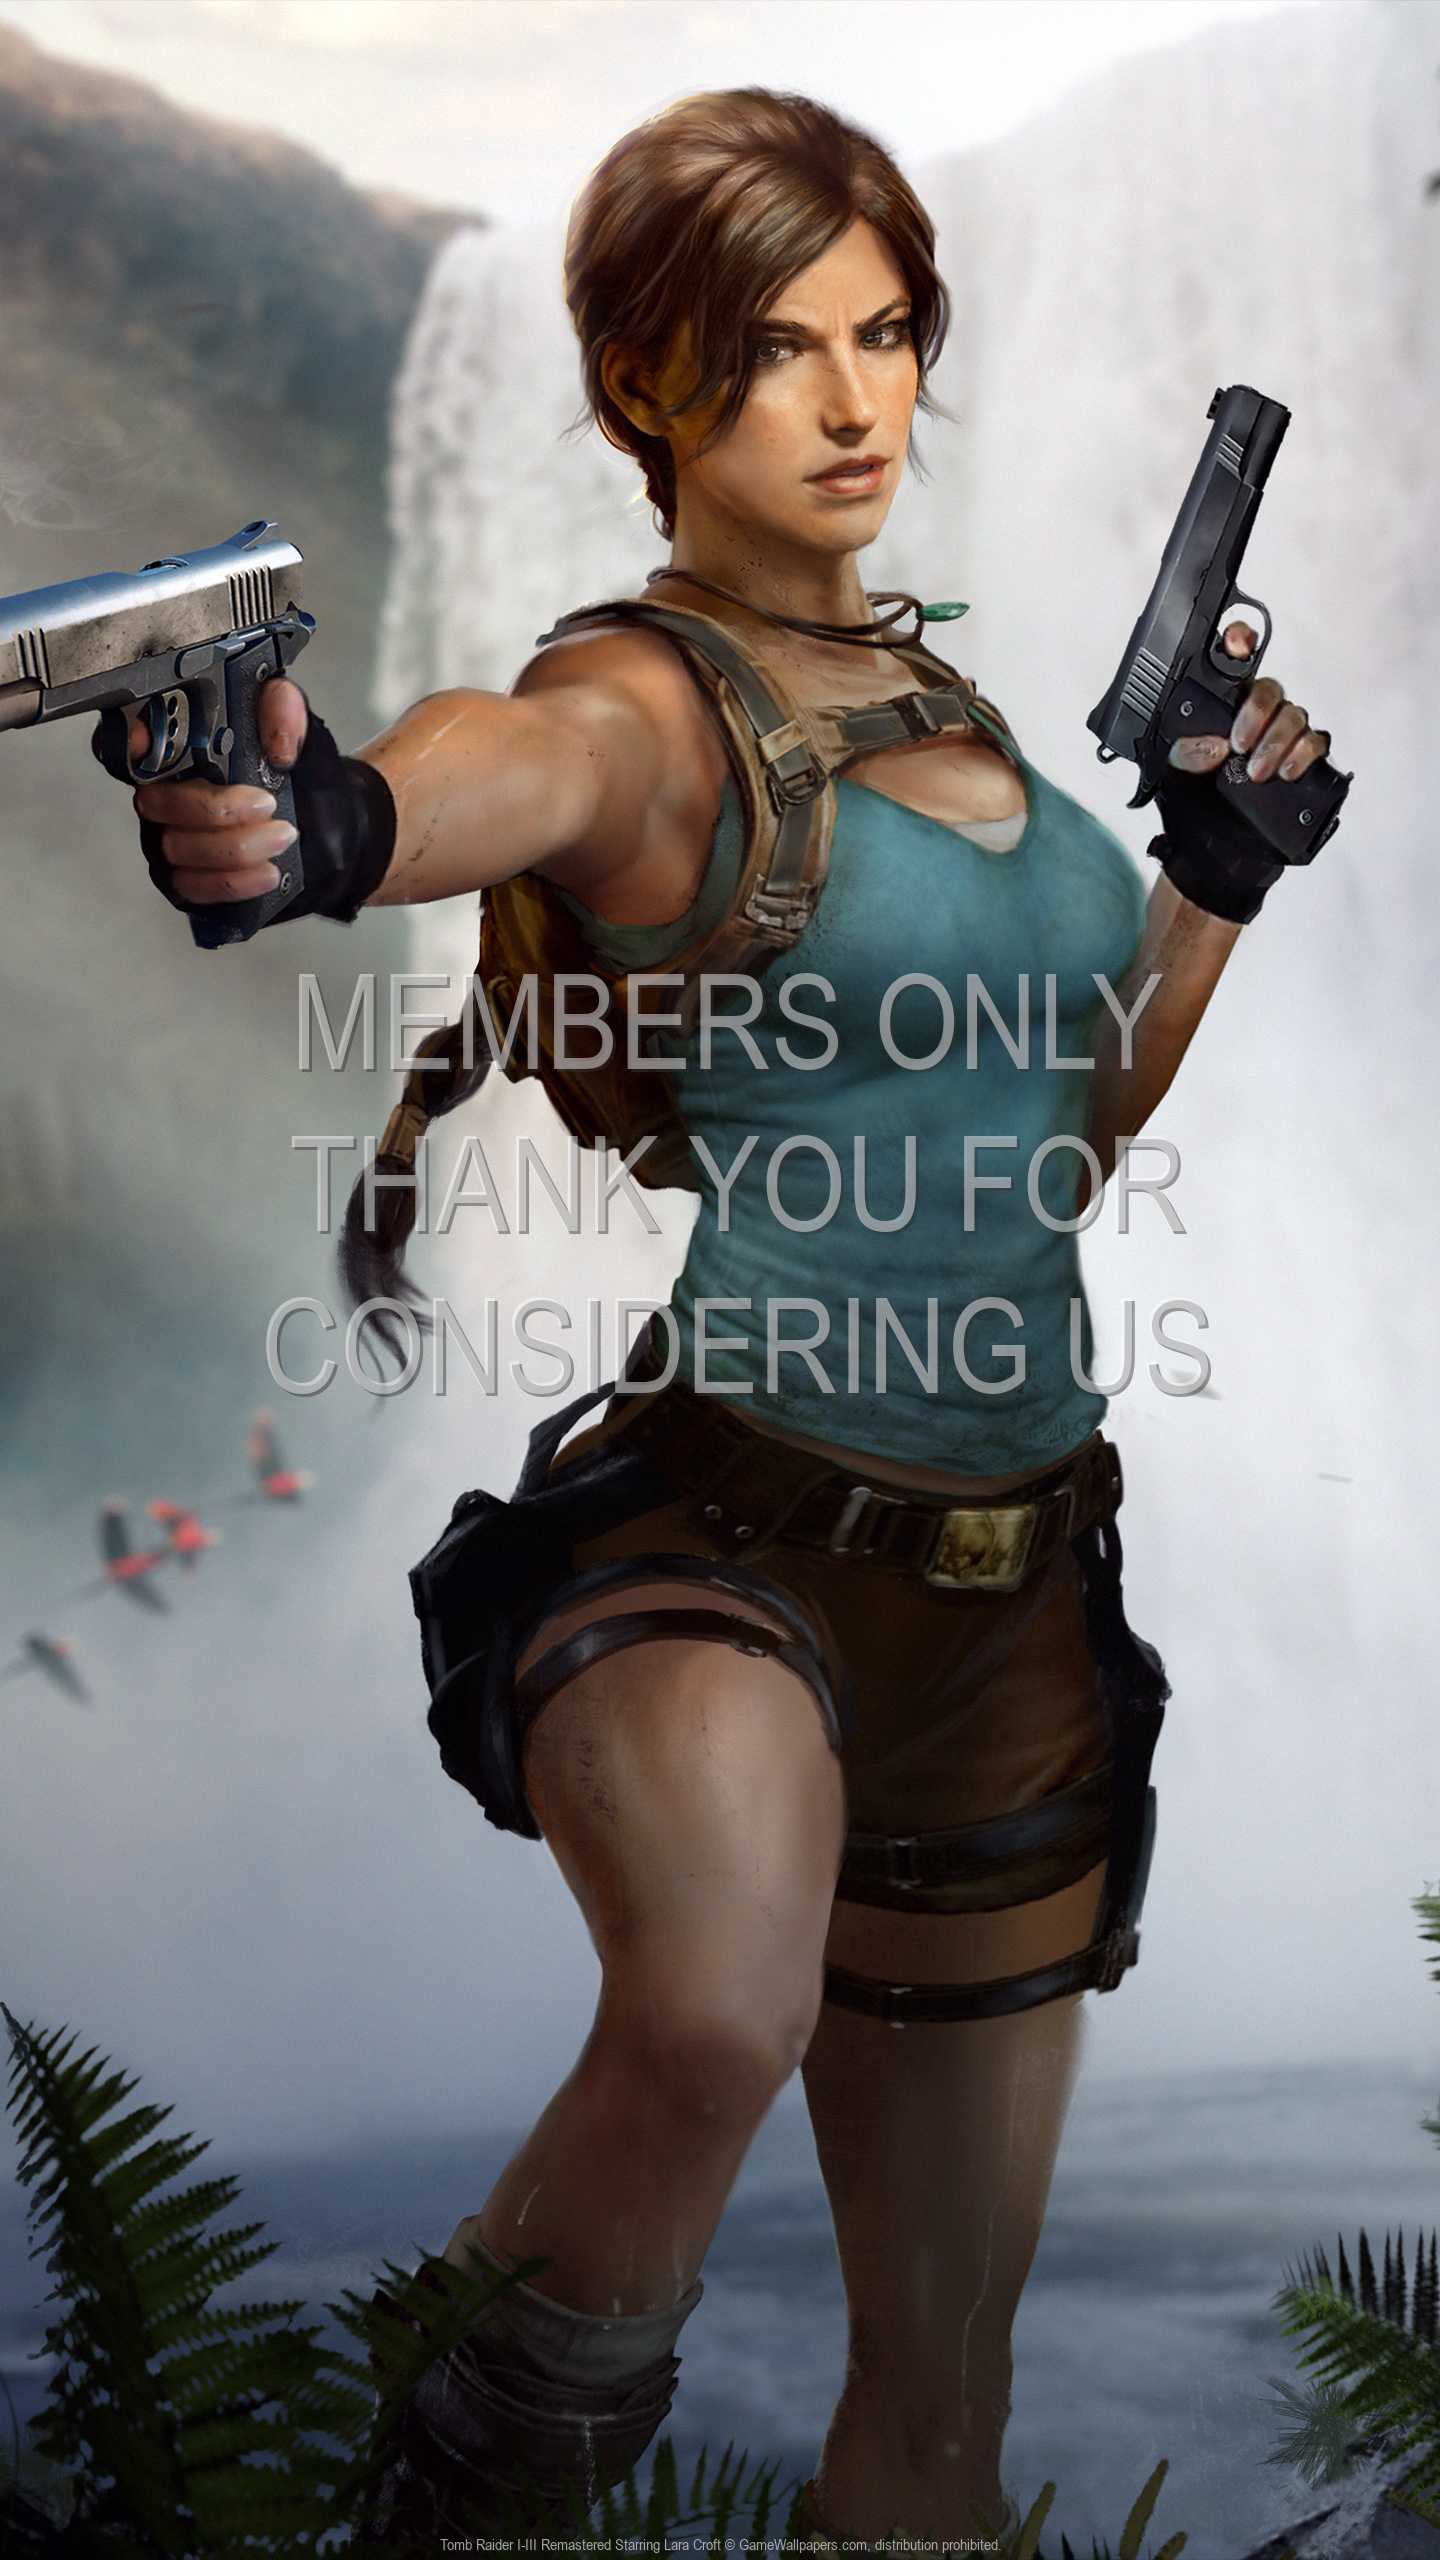 Tomb Raider I-III Remastered Starring Lara Croft 1440p Vertical Mobile wallpaper or background 02